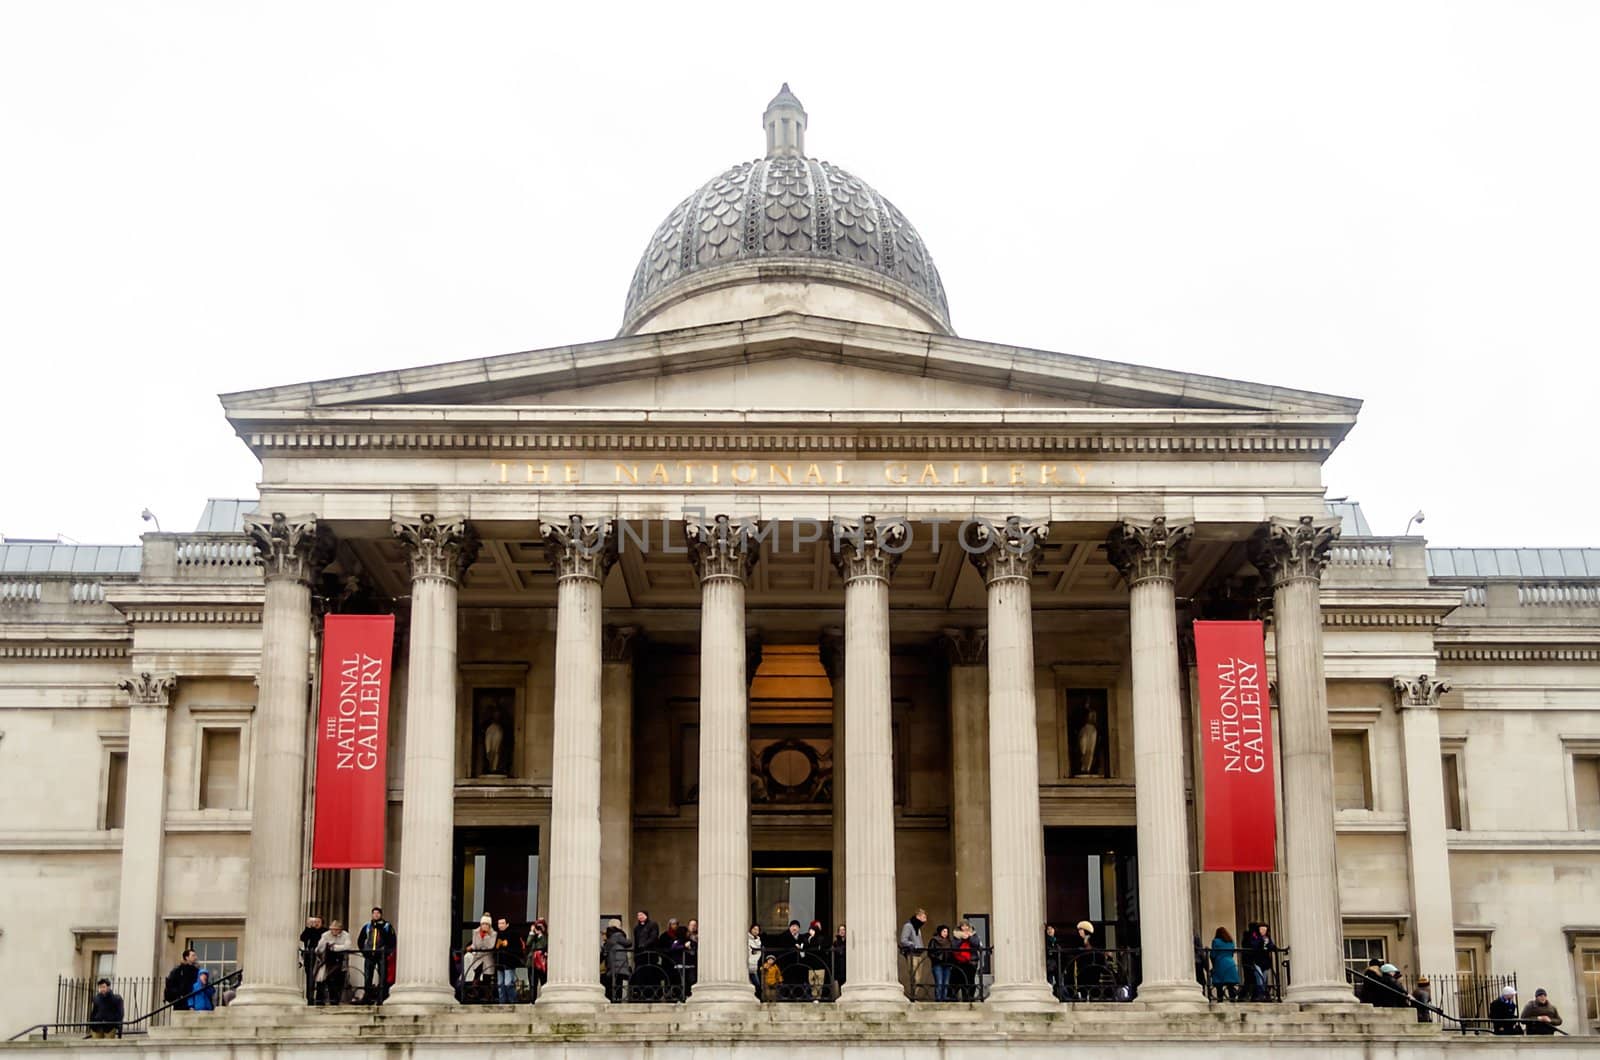 The National Gallery of London, UK by marcorubino